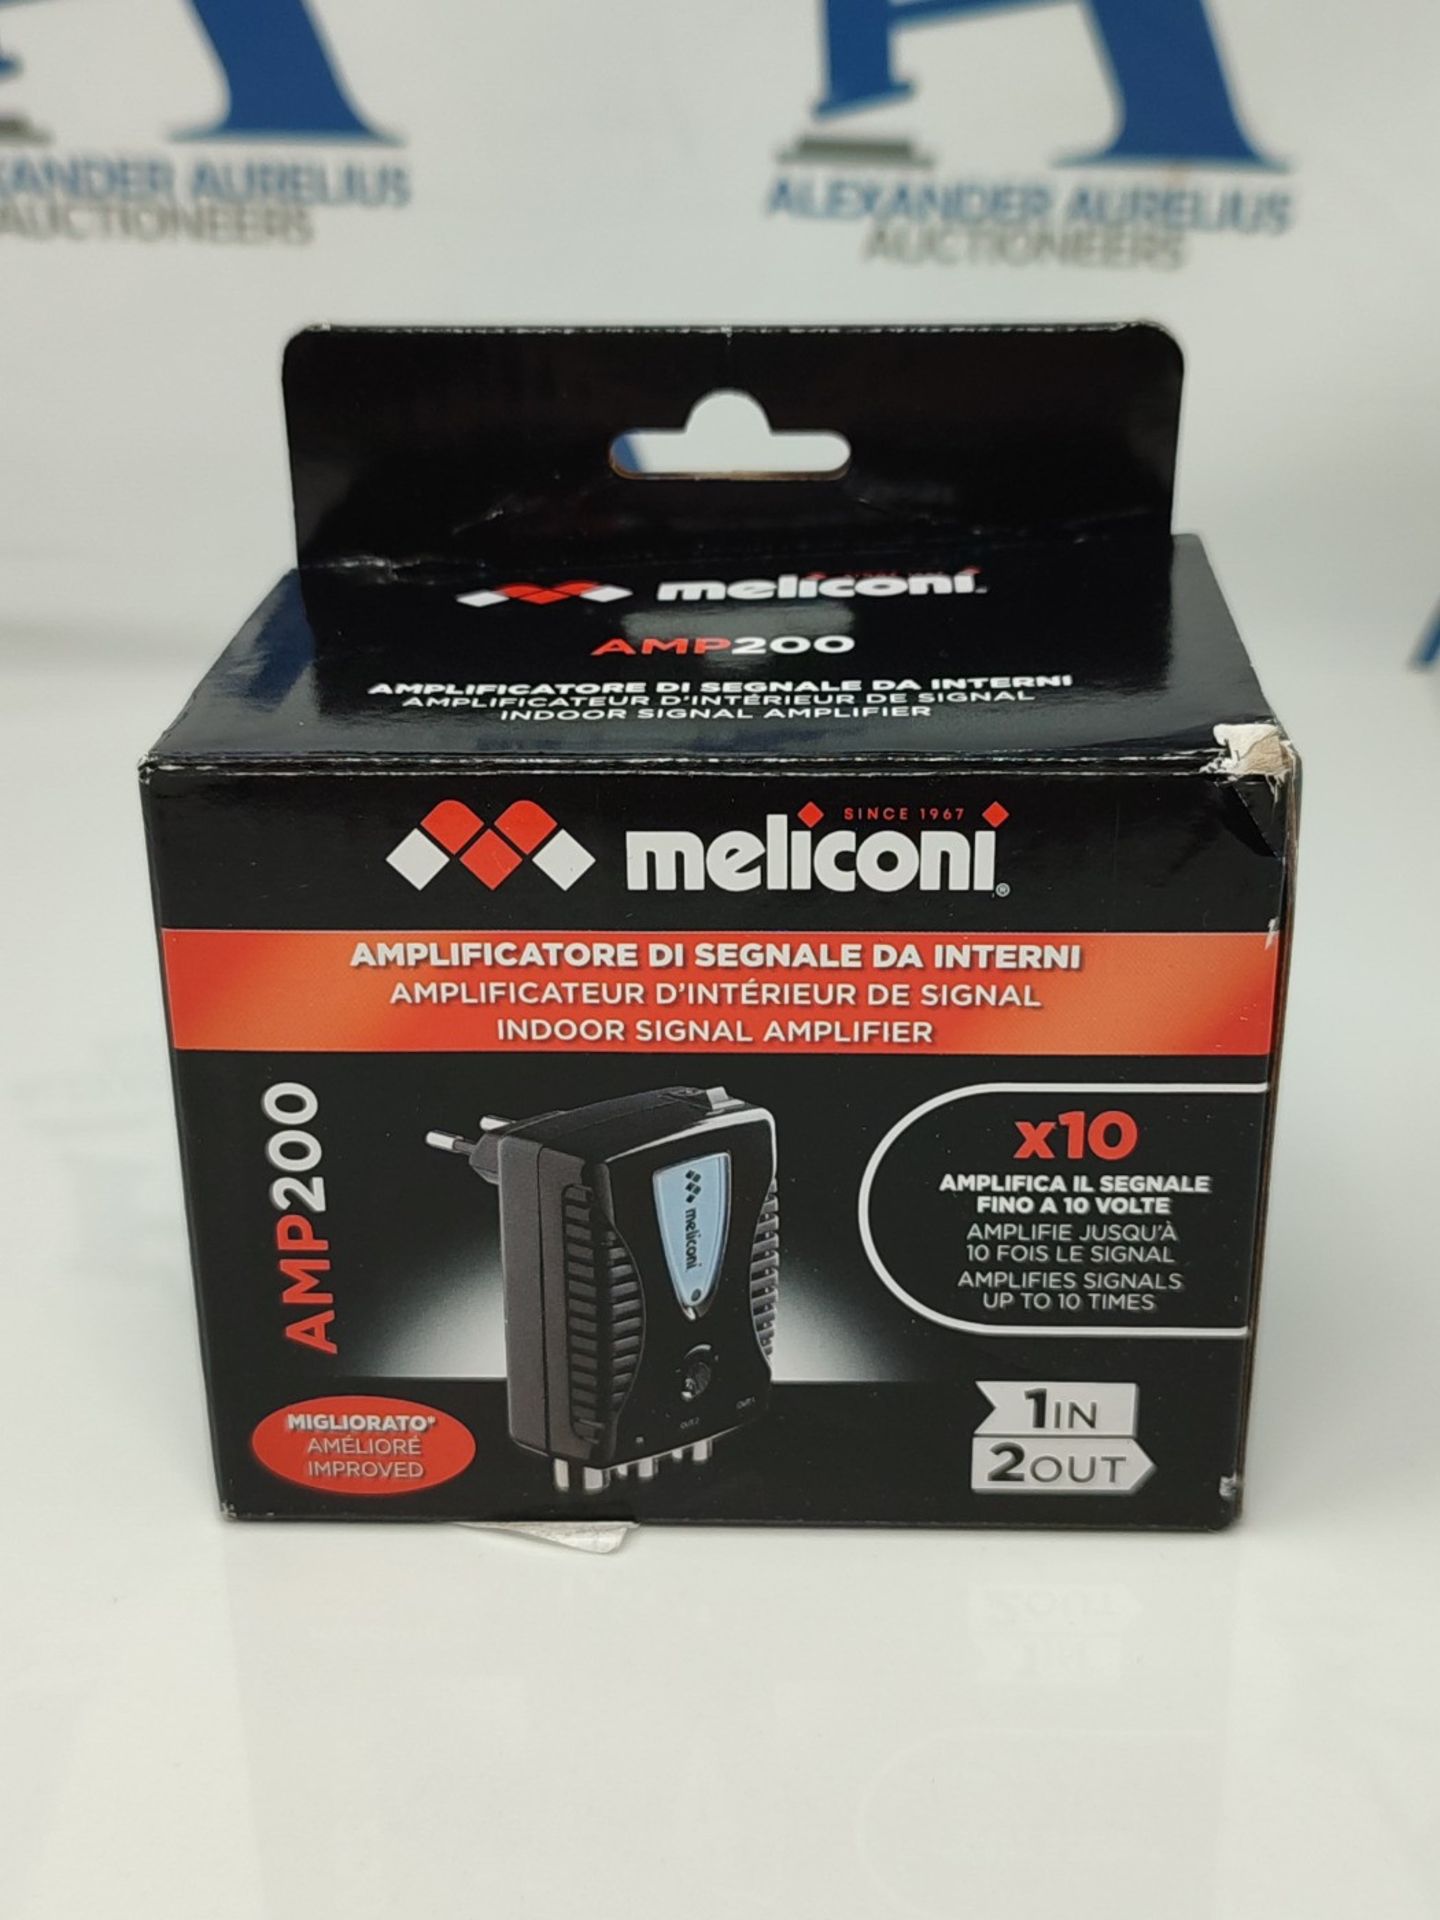 Meliconi AMP200, TV Antenna Amplifier, 2-Way Indoor Digital Signal Amplifier, Direct 2 - Image 2 of 3